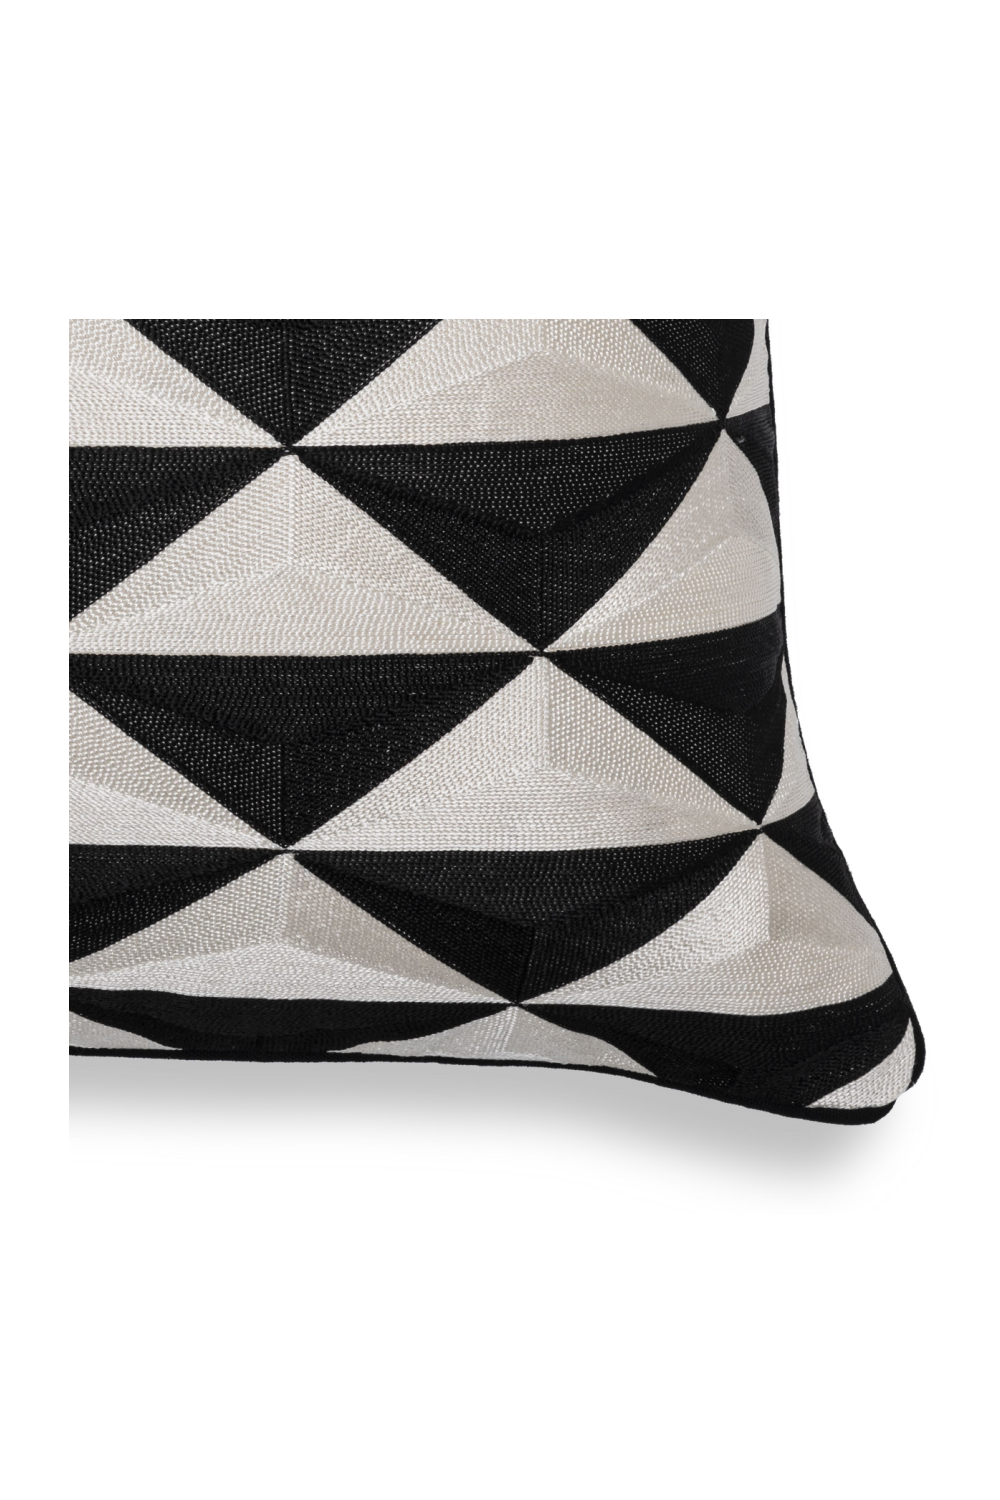 Black & White Decorative Pillow | Eichholtz Mist | OROA.com